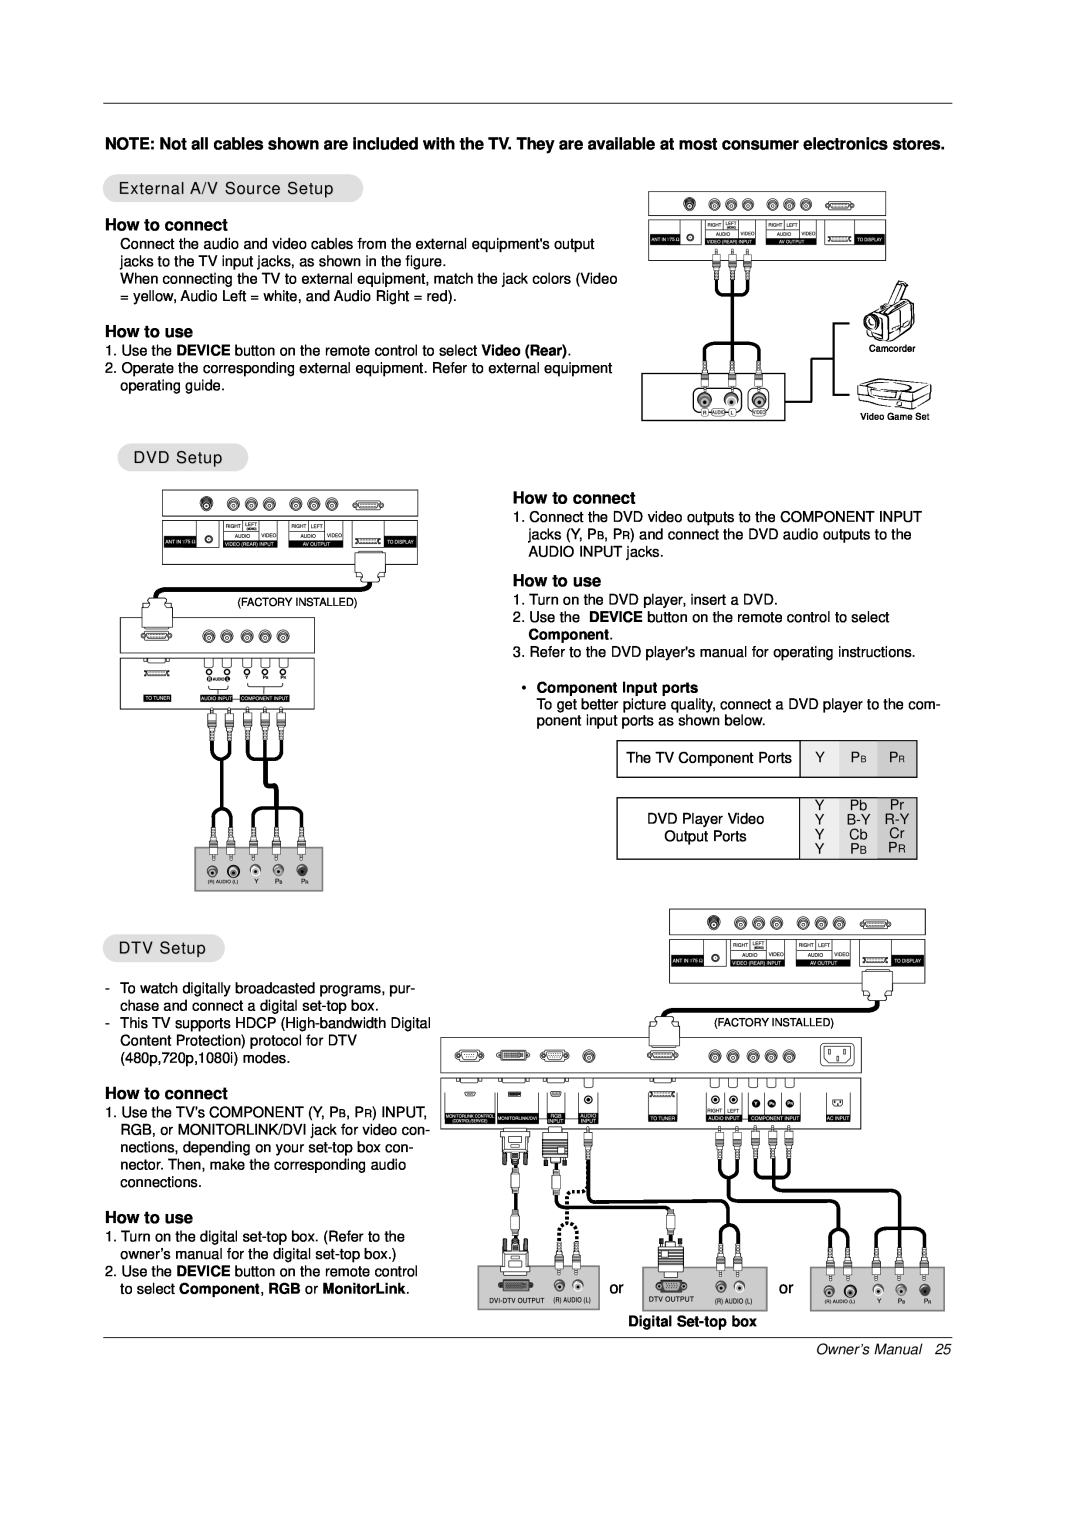 Mitsubishi Electronics PD-4225S manual External A/V Source Setup, How to connect, How to use, DVD Setup, DTV Setup 